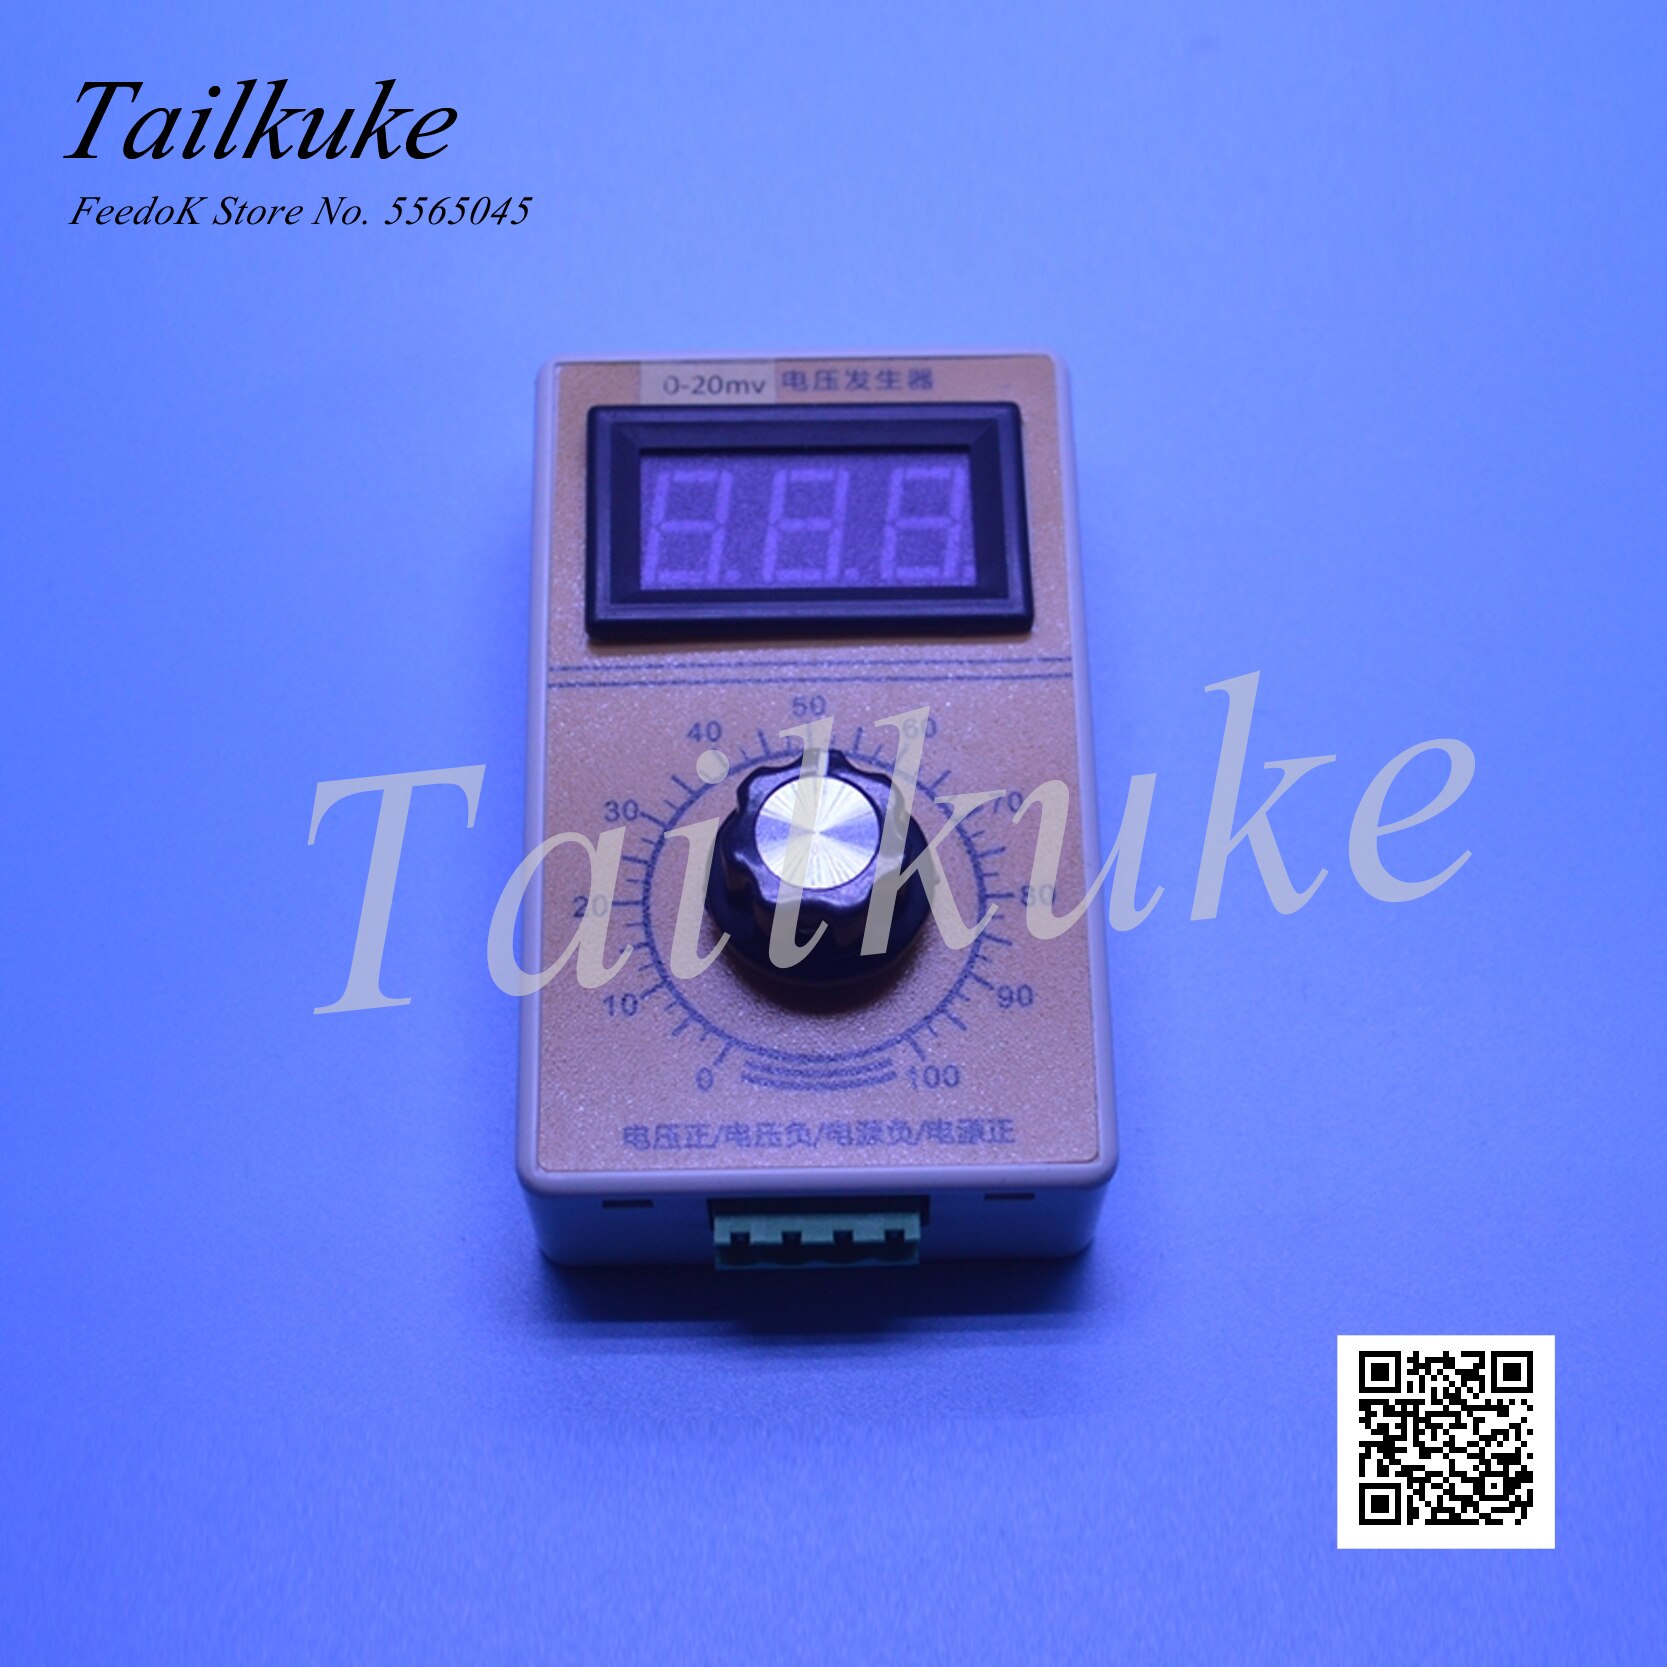 0-20mV / 0-50mv / 0-100mv Signal Generator Signal Quelle Controller Spannung Generator